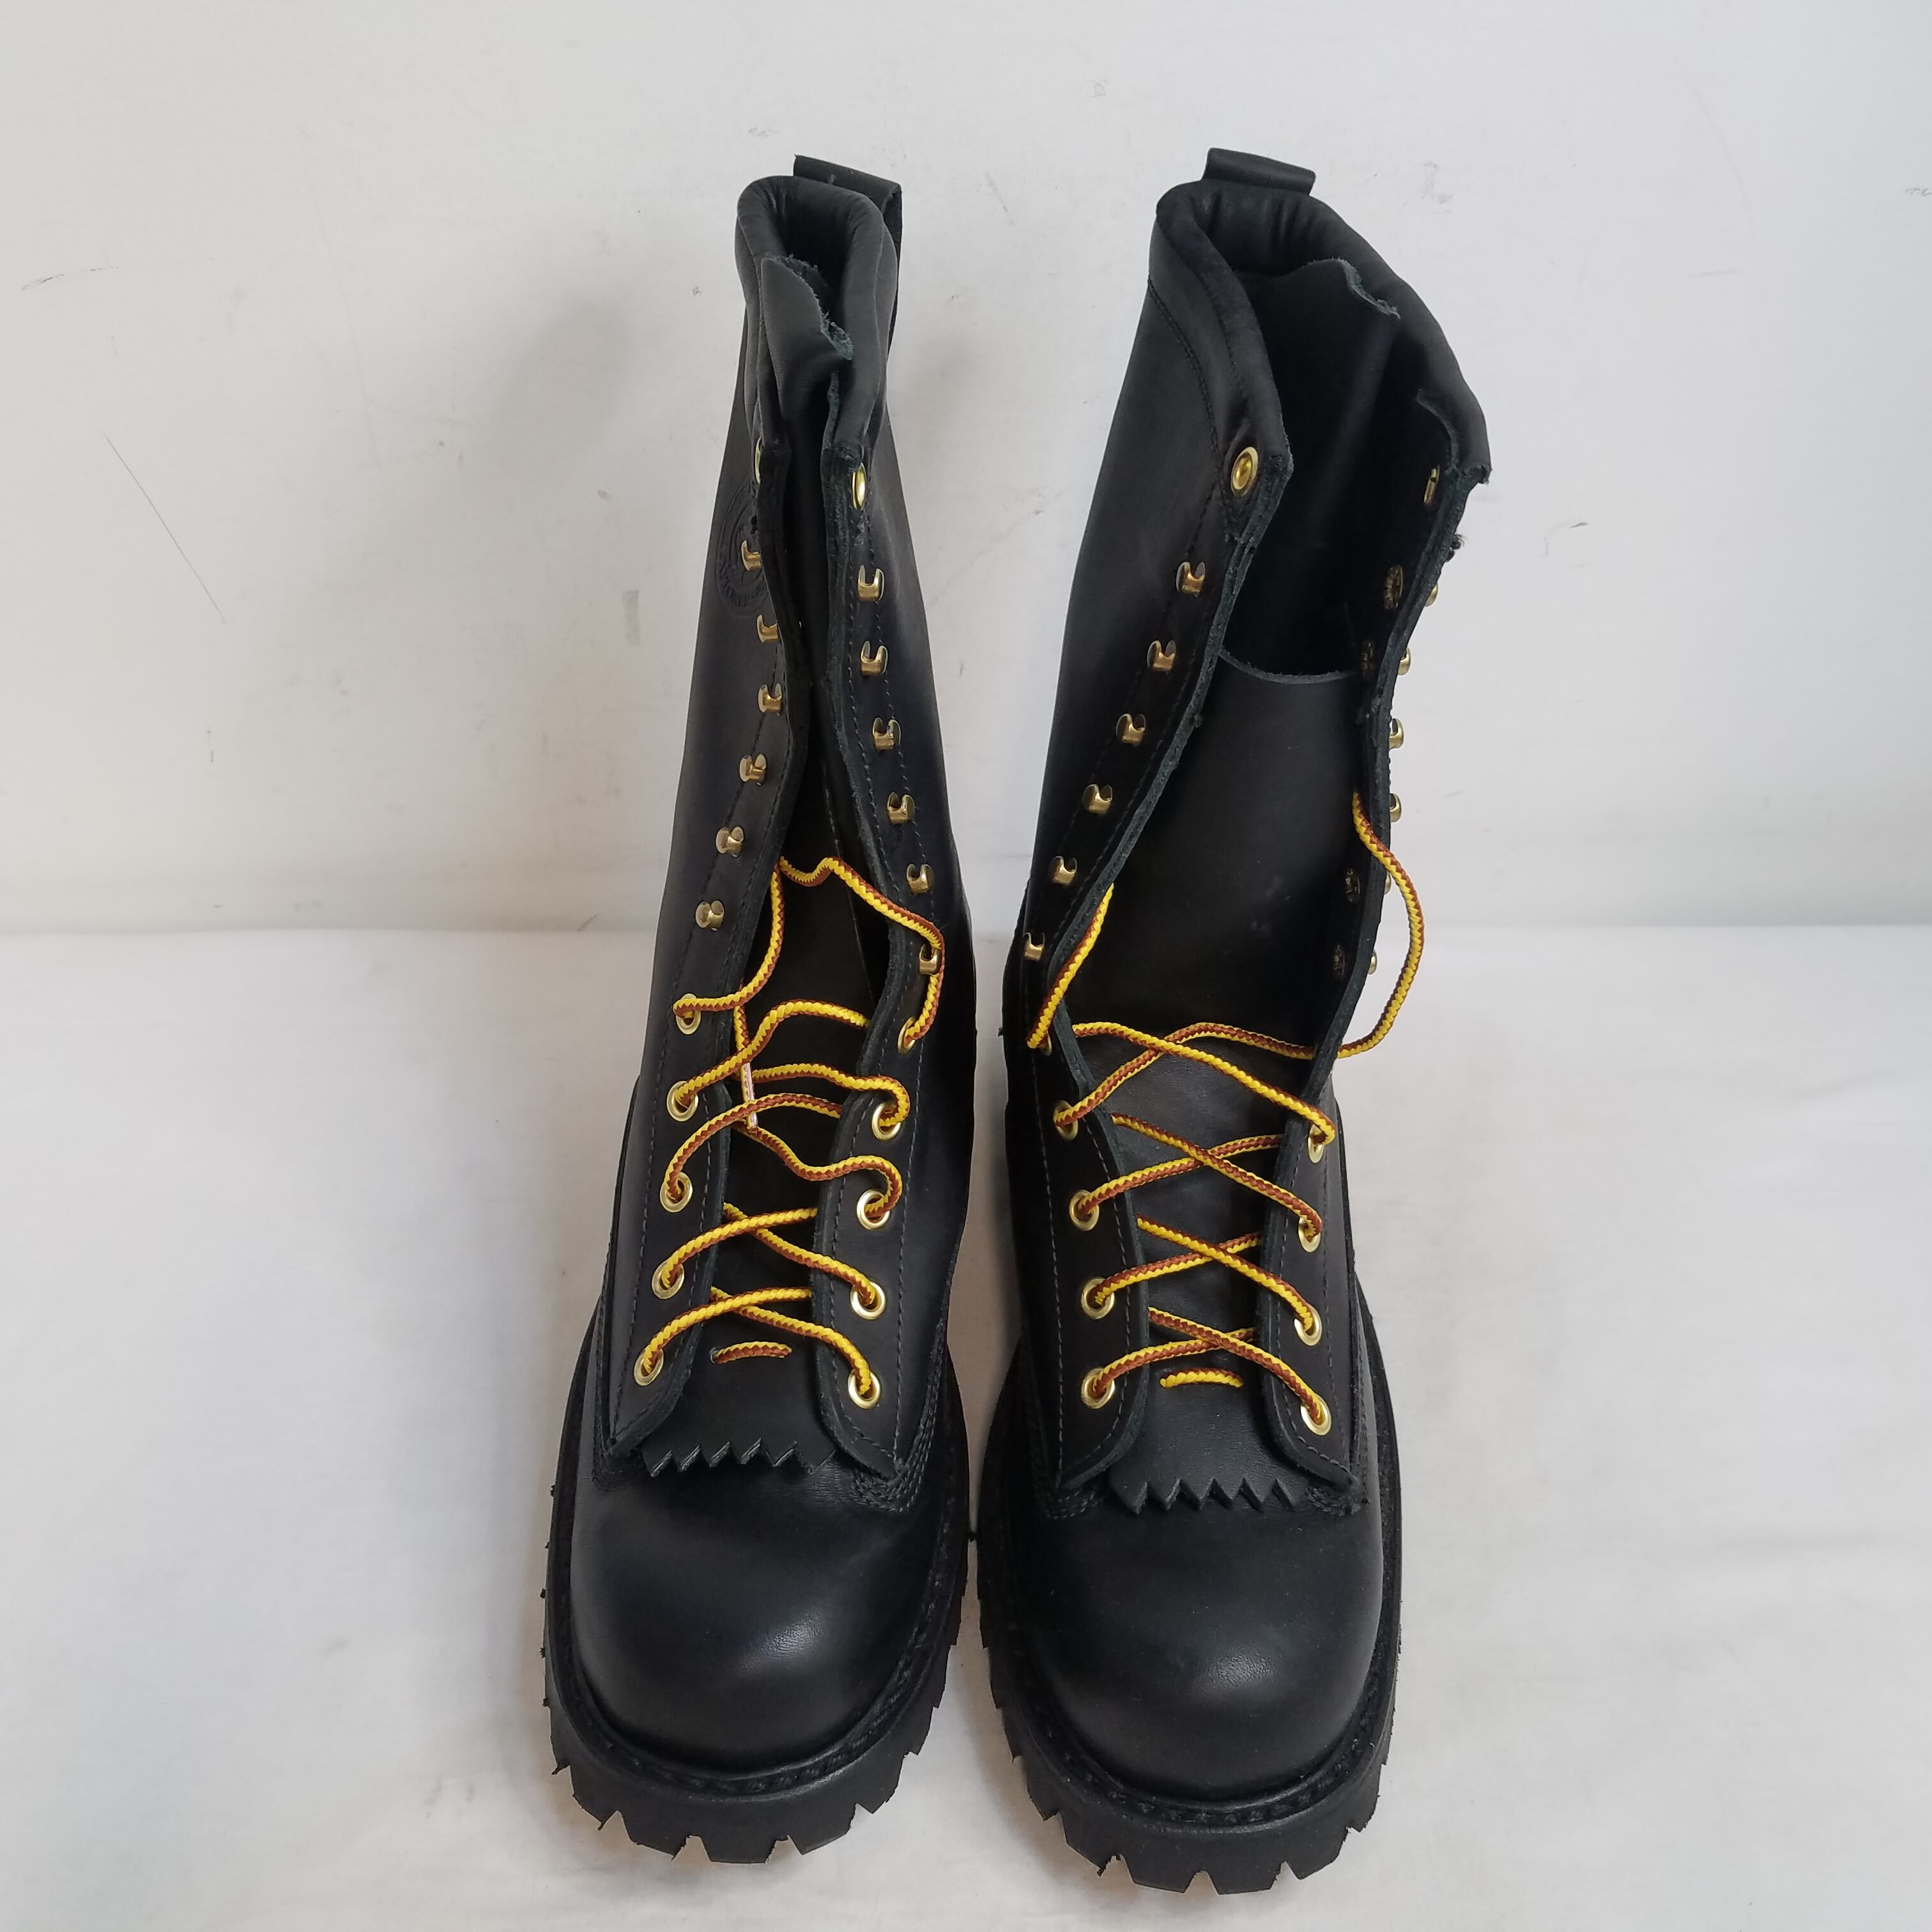 Hathorn Explorer Men's Work Boots Black Size 10